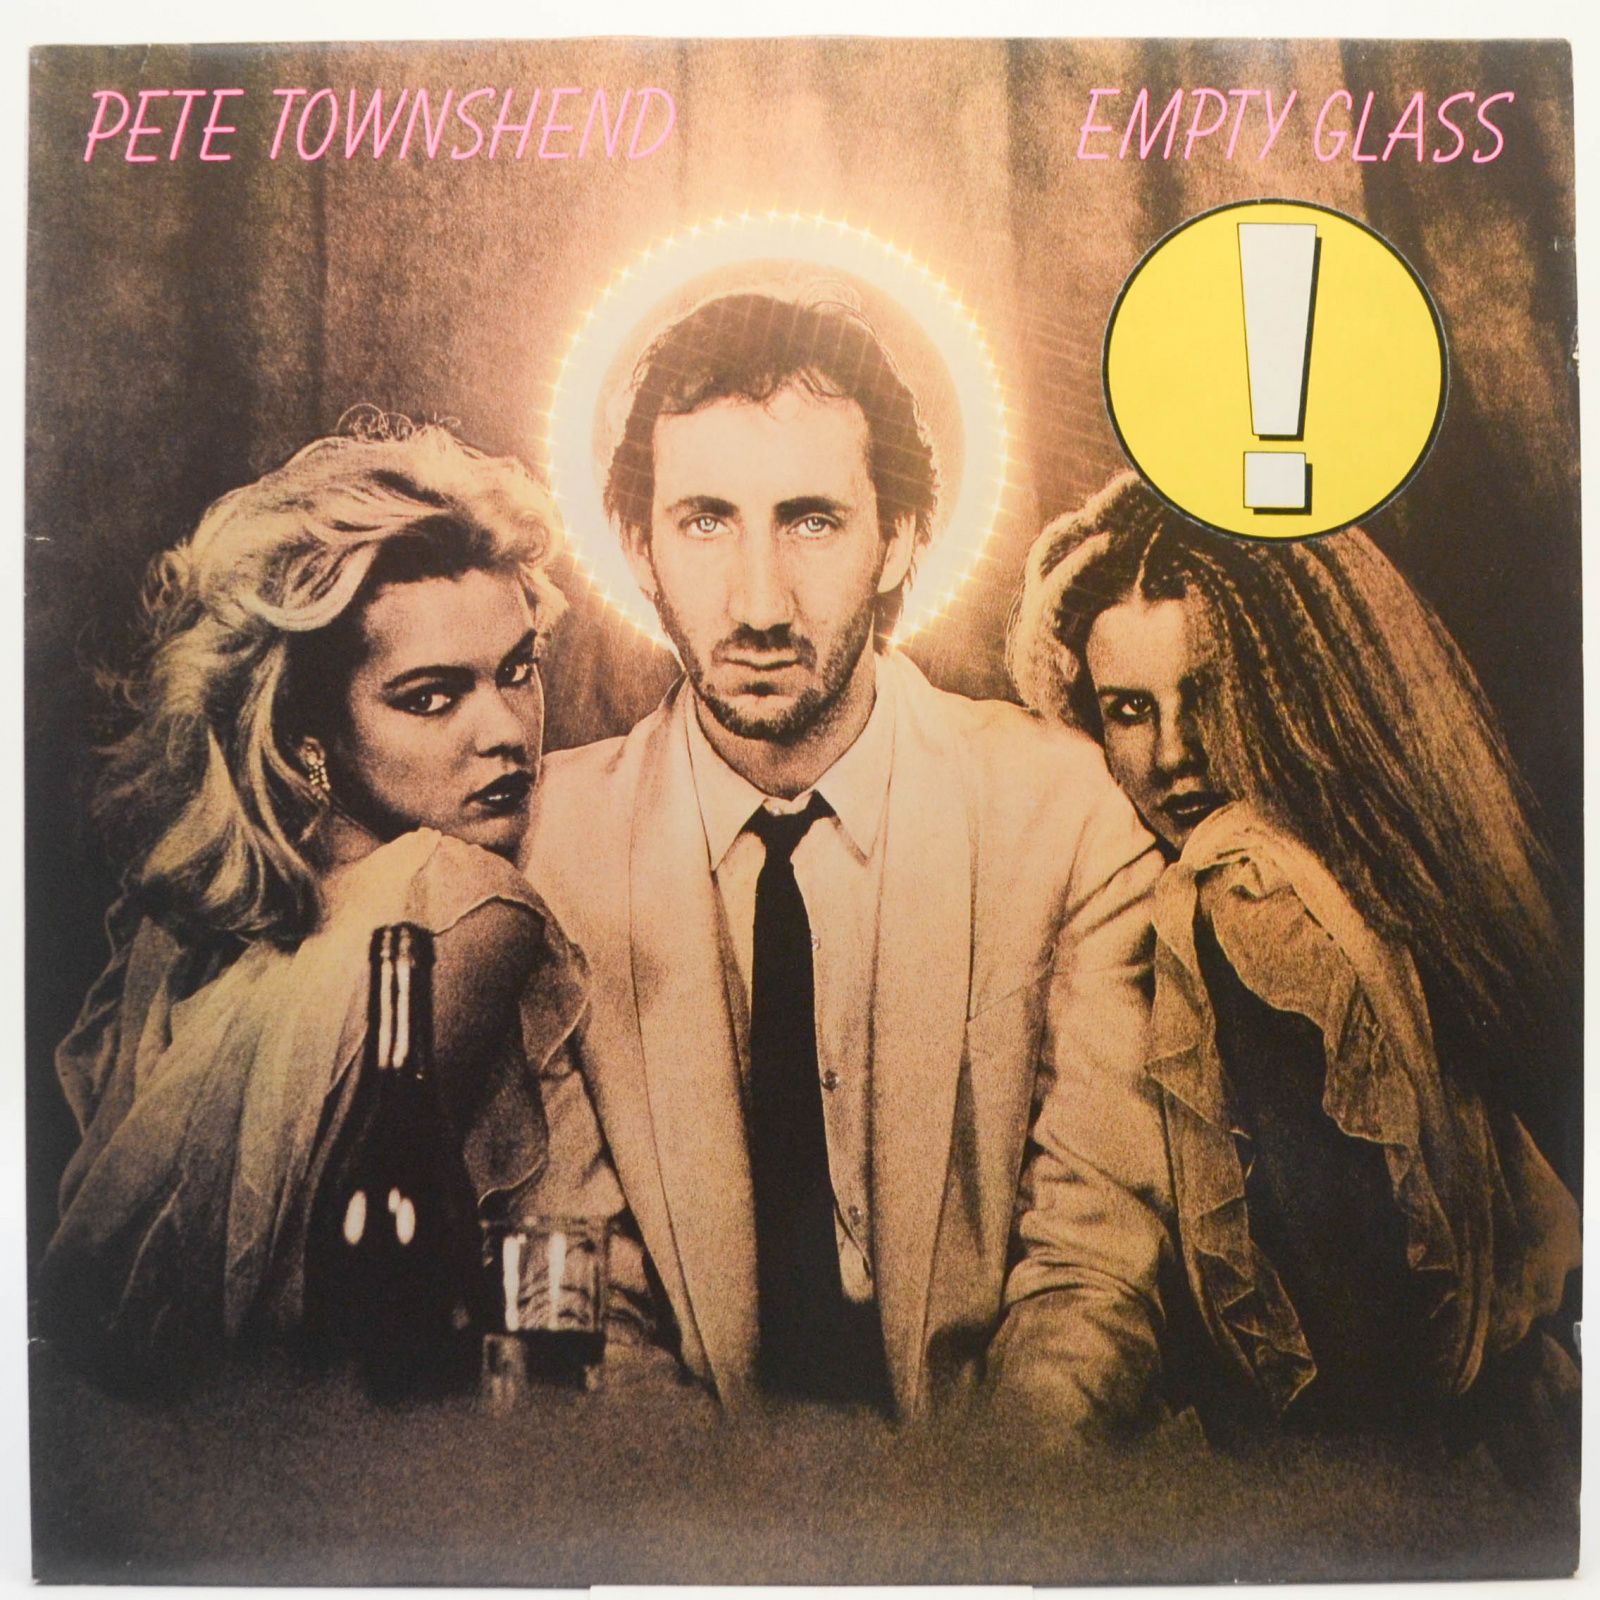 Pete Townshend — Empty Glass, 1980